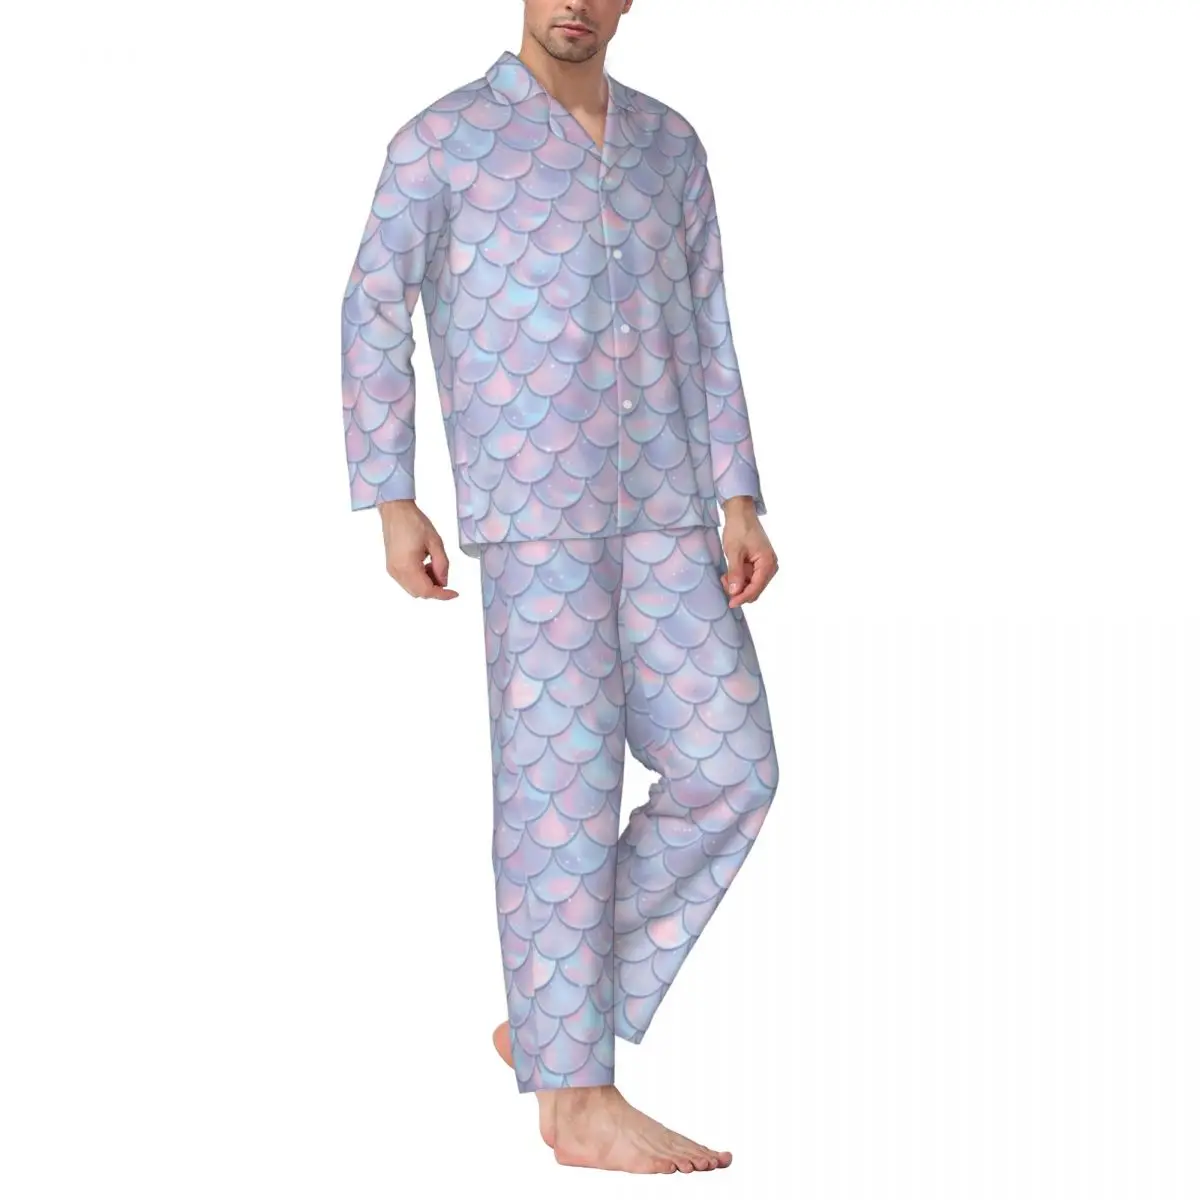 

Pink Mermaid Scale Pajamas Set Spring Fantasy Print Leisure Sleepwear Man 2 Pieces Casual Oversize Custom Nightwear Gift Idea